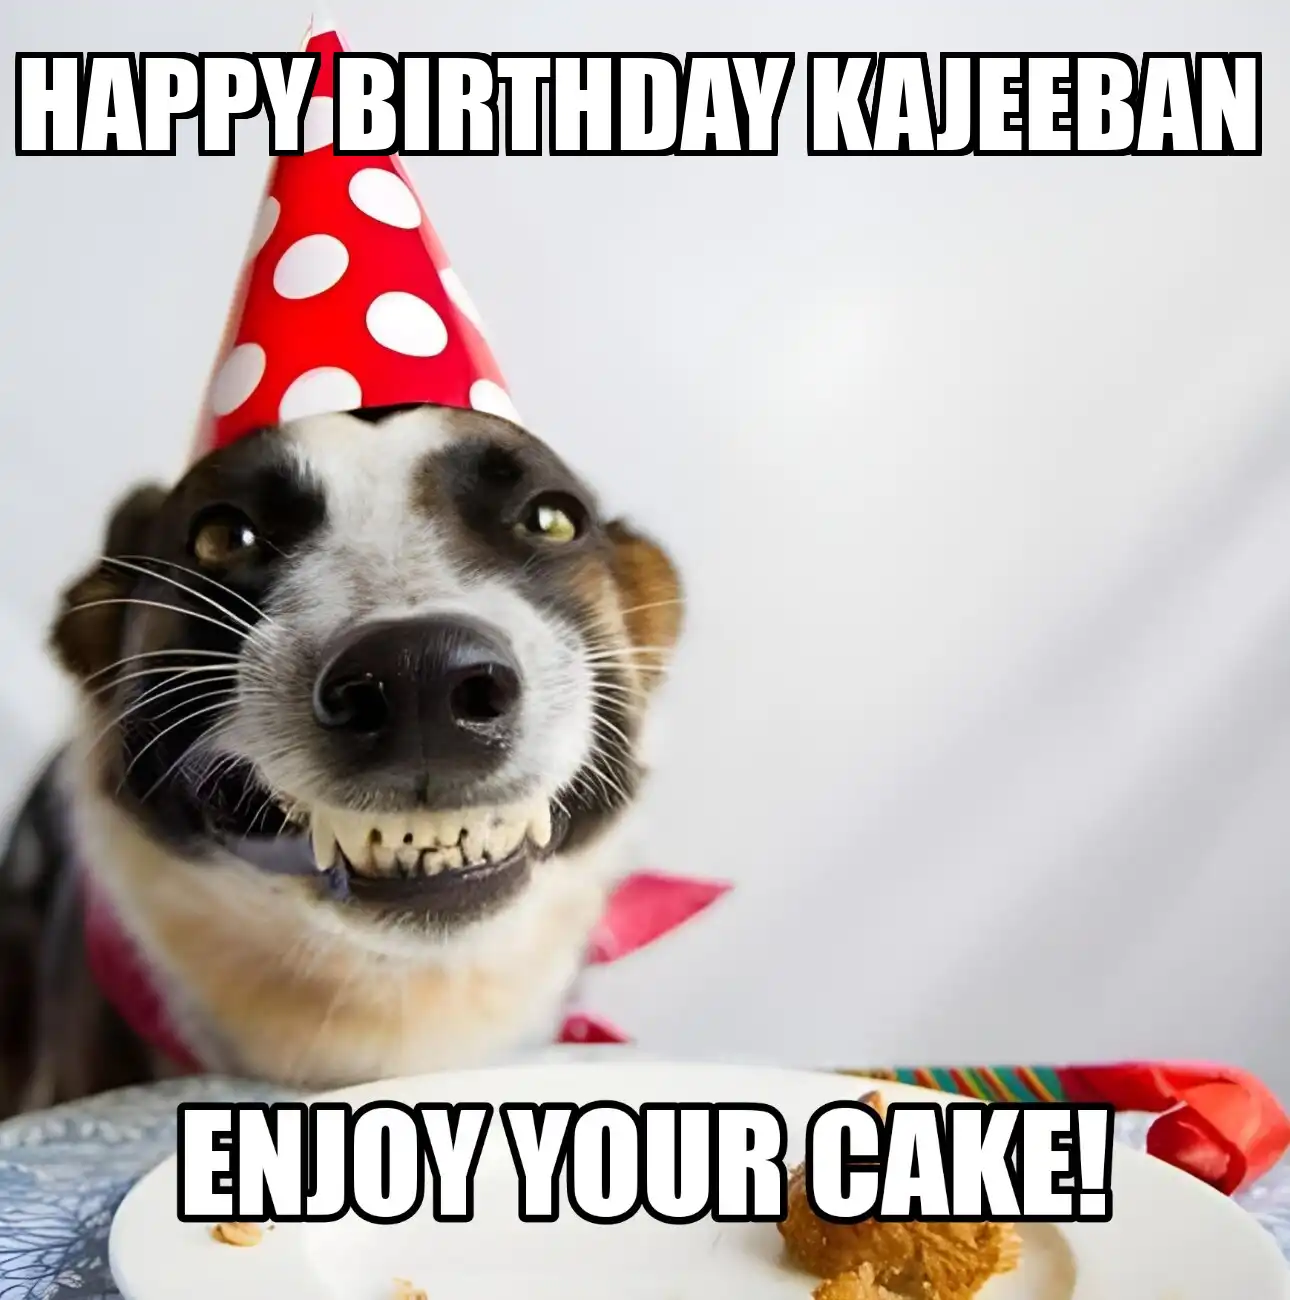 Happy Birthday Kajeeban Enjoy Your Cake Dog Meme